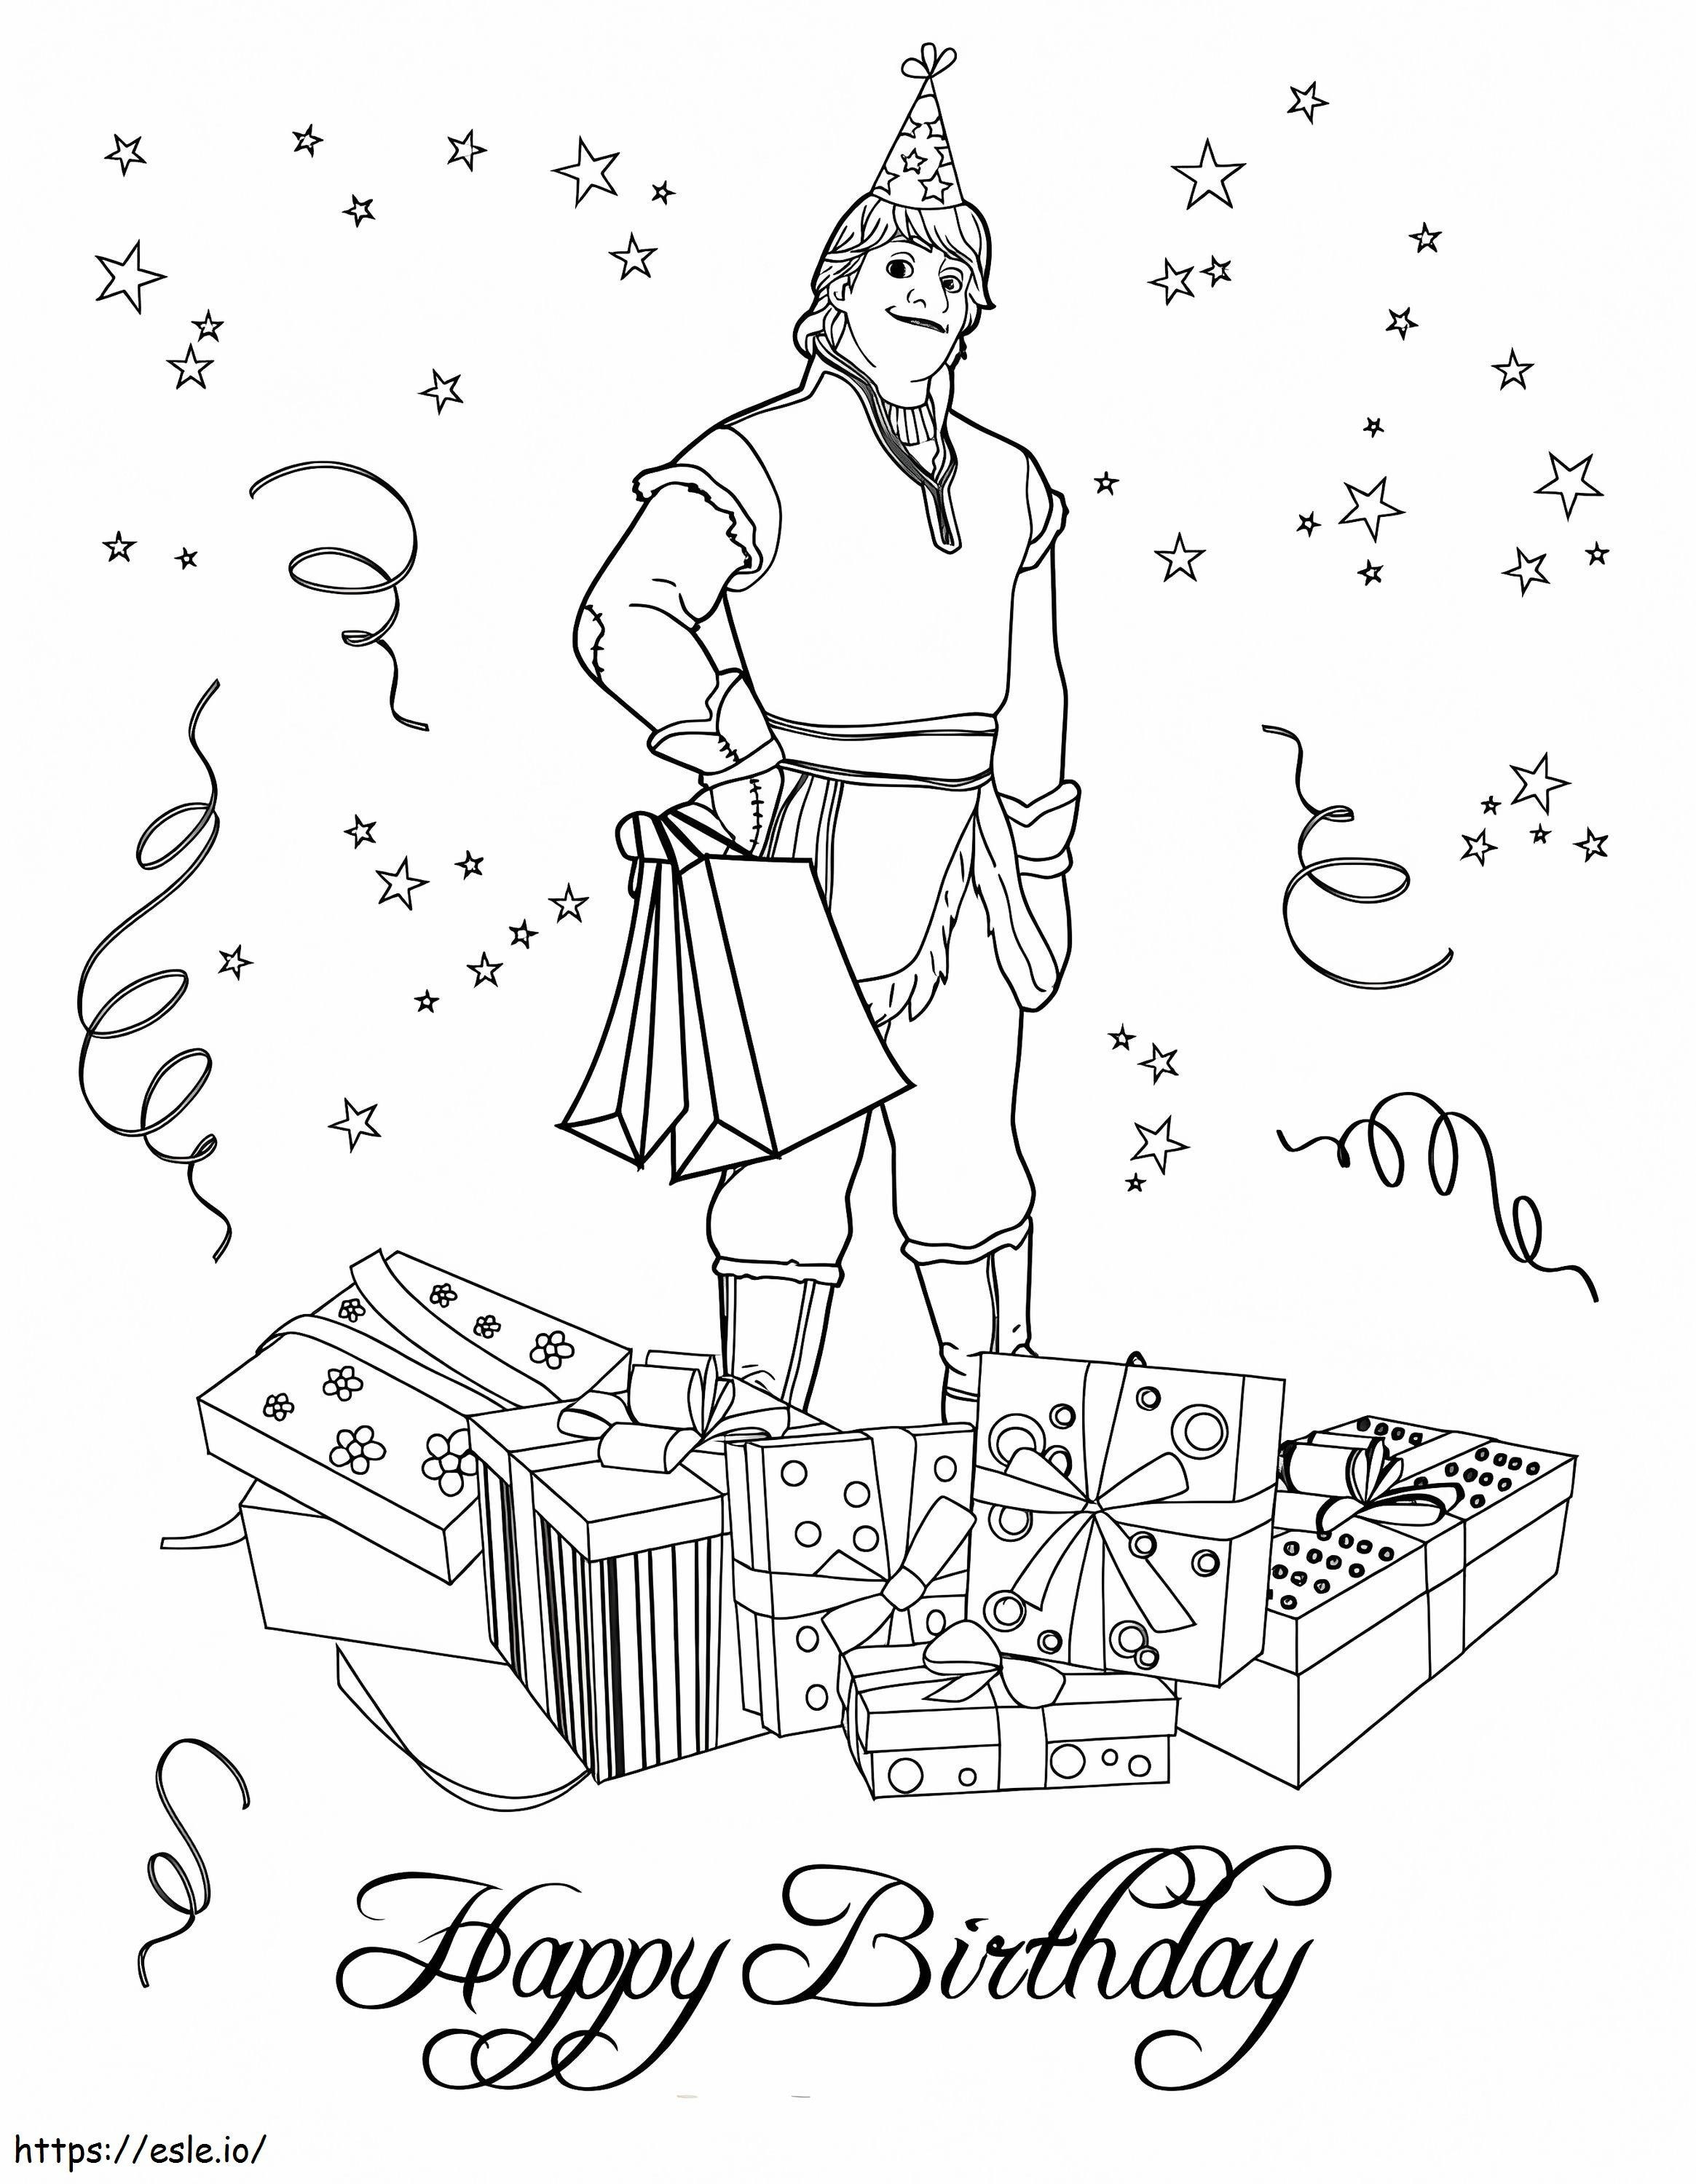 Kristoff Birthday coloring page